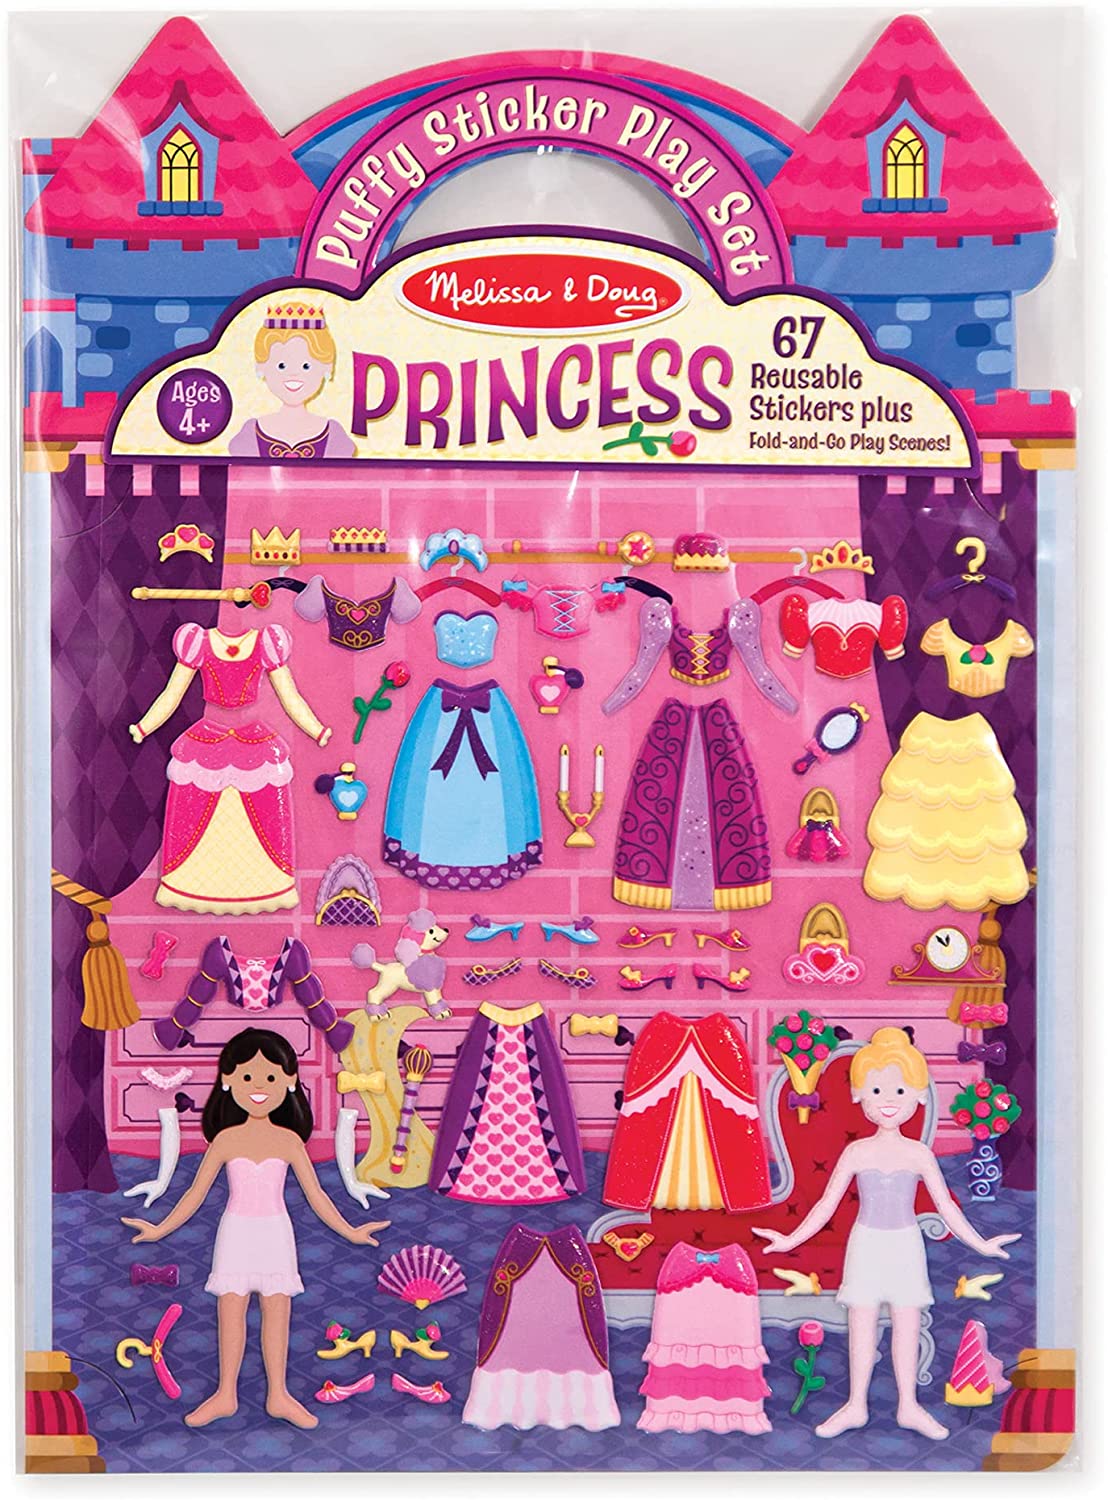 Puffy Sticker Play Set - Princess